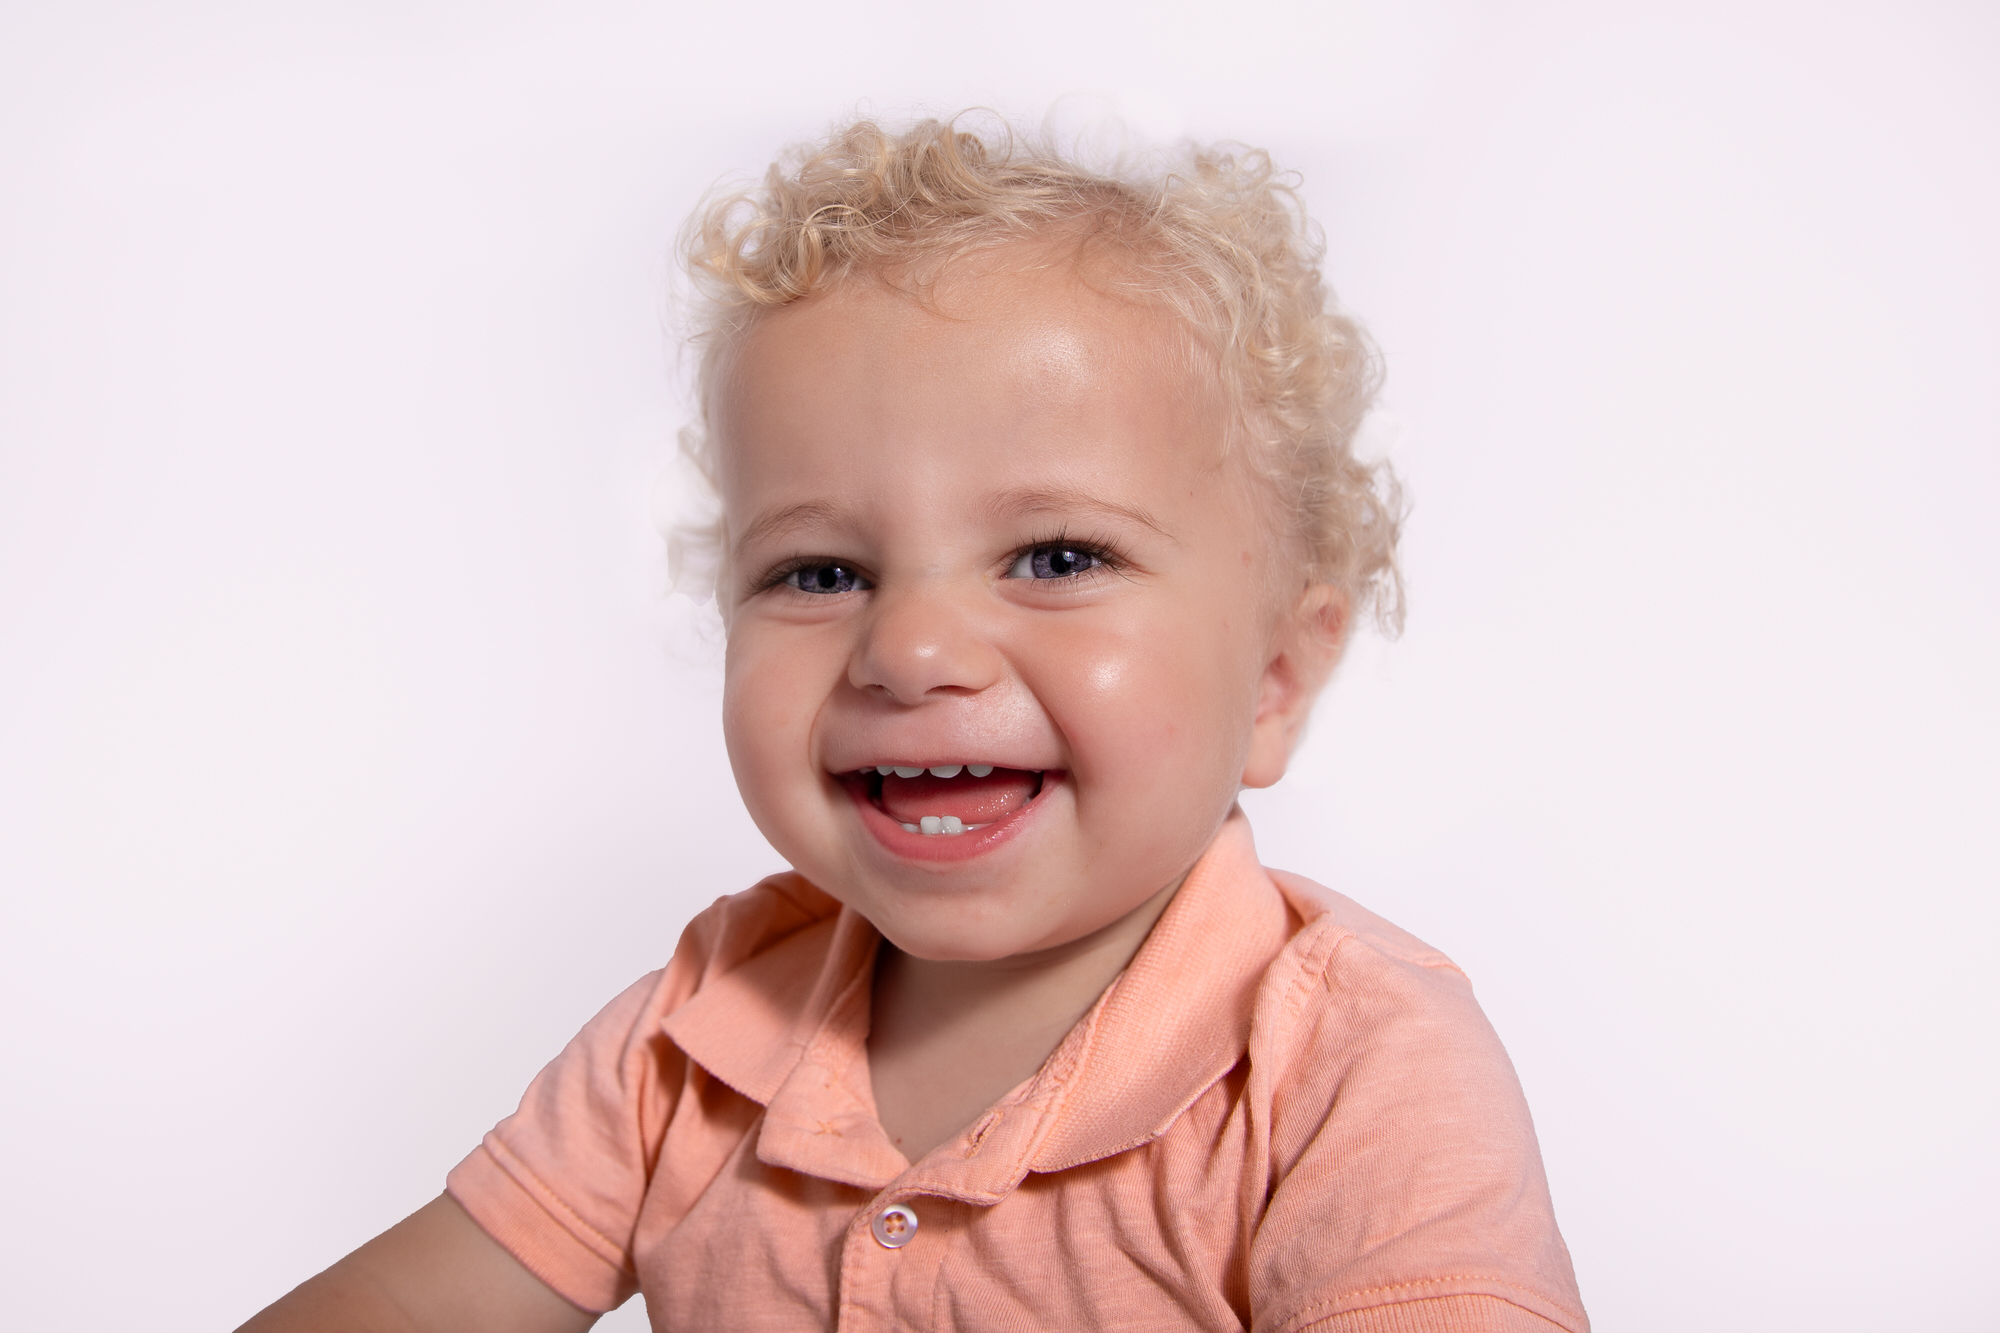 Smiling blond toddler having photoshoot in stroud